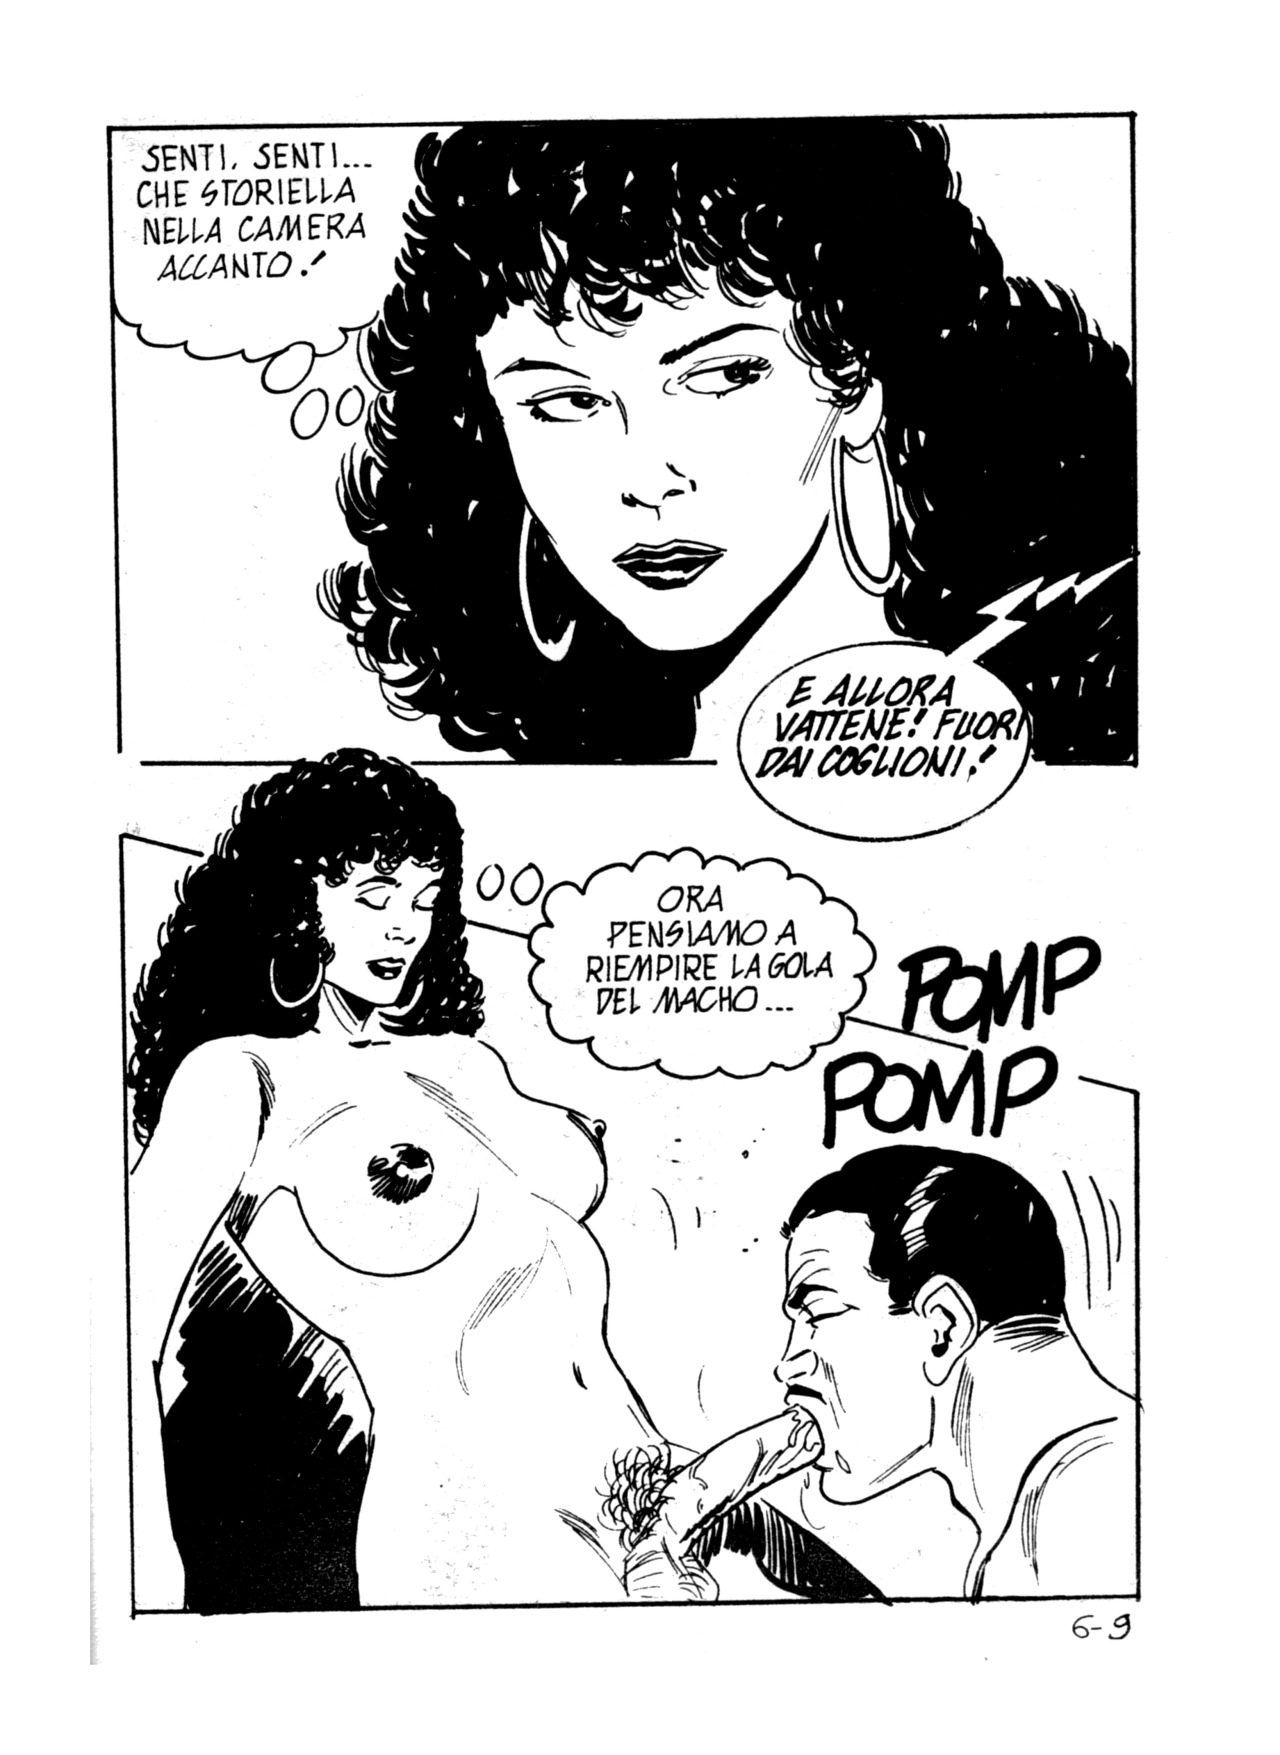 agracier Â  said:transgender scene from an Italian erotic comic â€¦http://transeroticart.tumblr.com